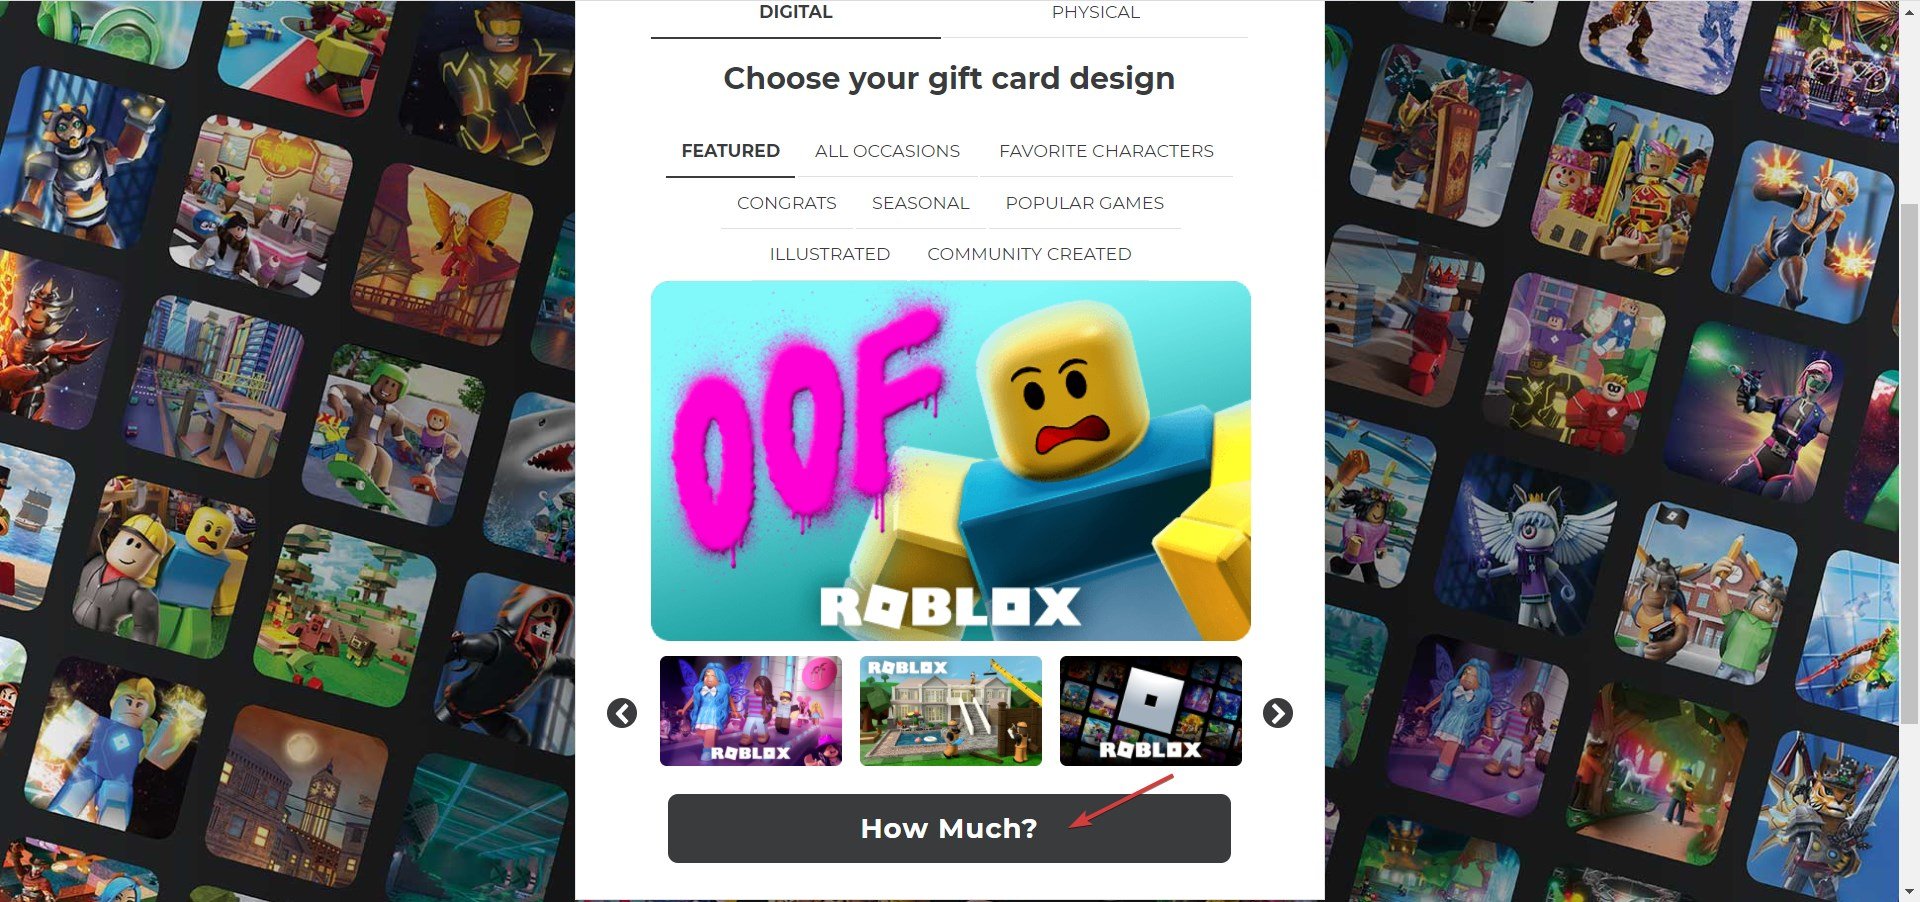 Roblox digital card is back to microsoft rewards! : r/roblox